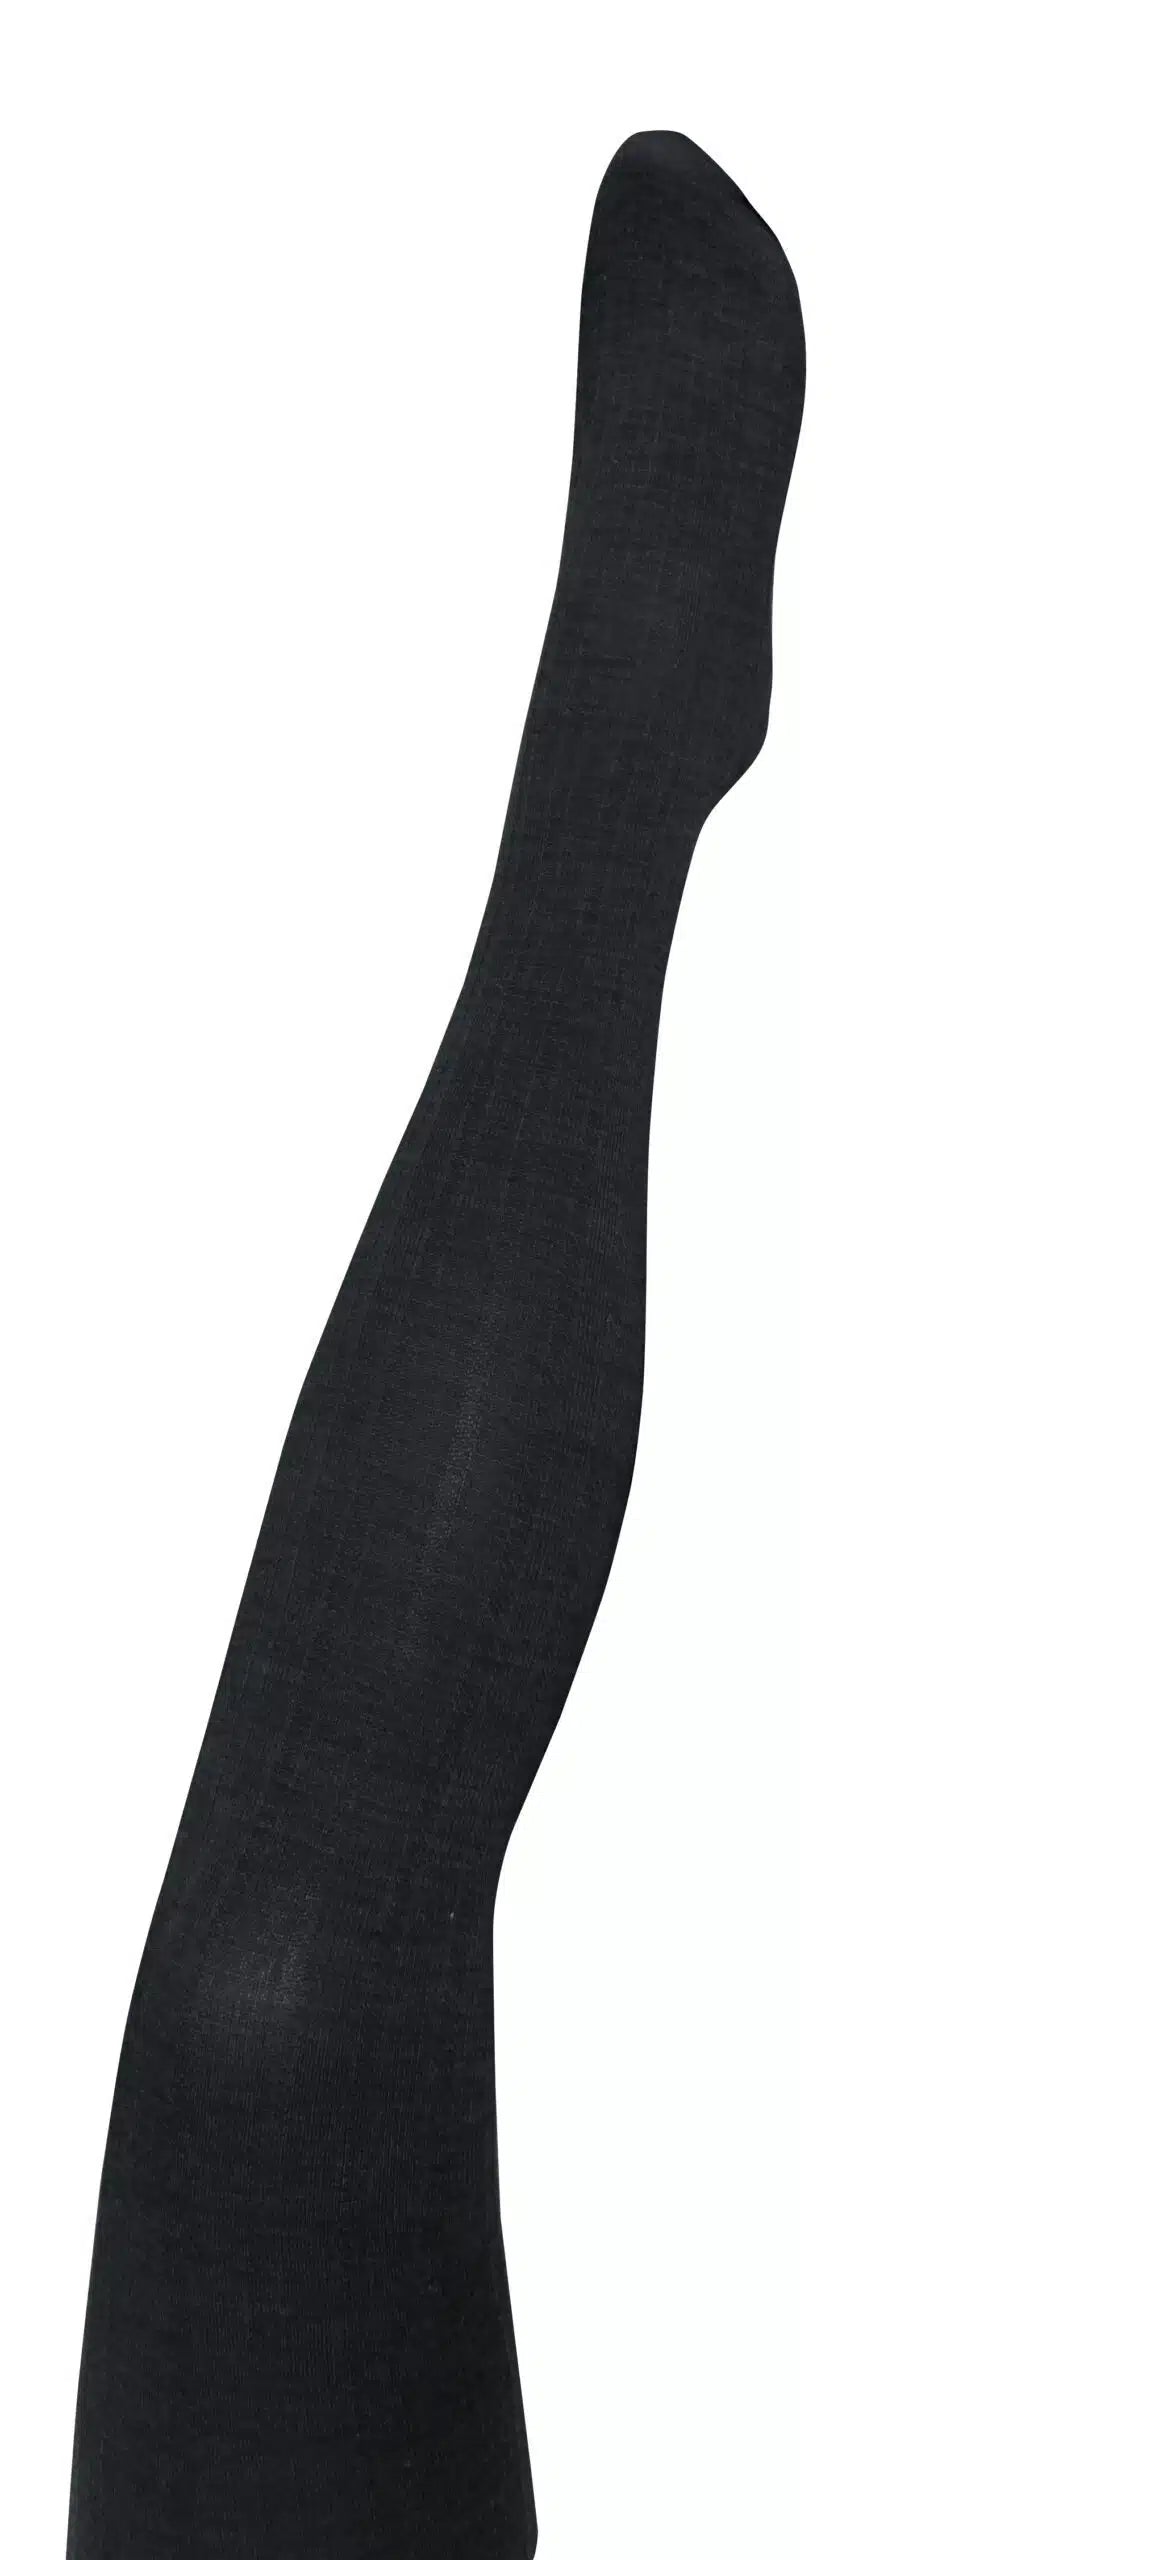 Tightology Staple Wool Tights in Black